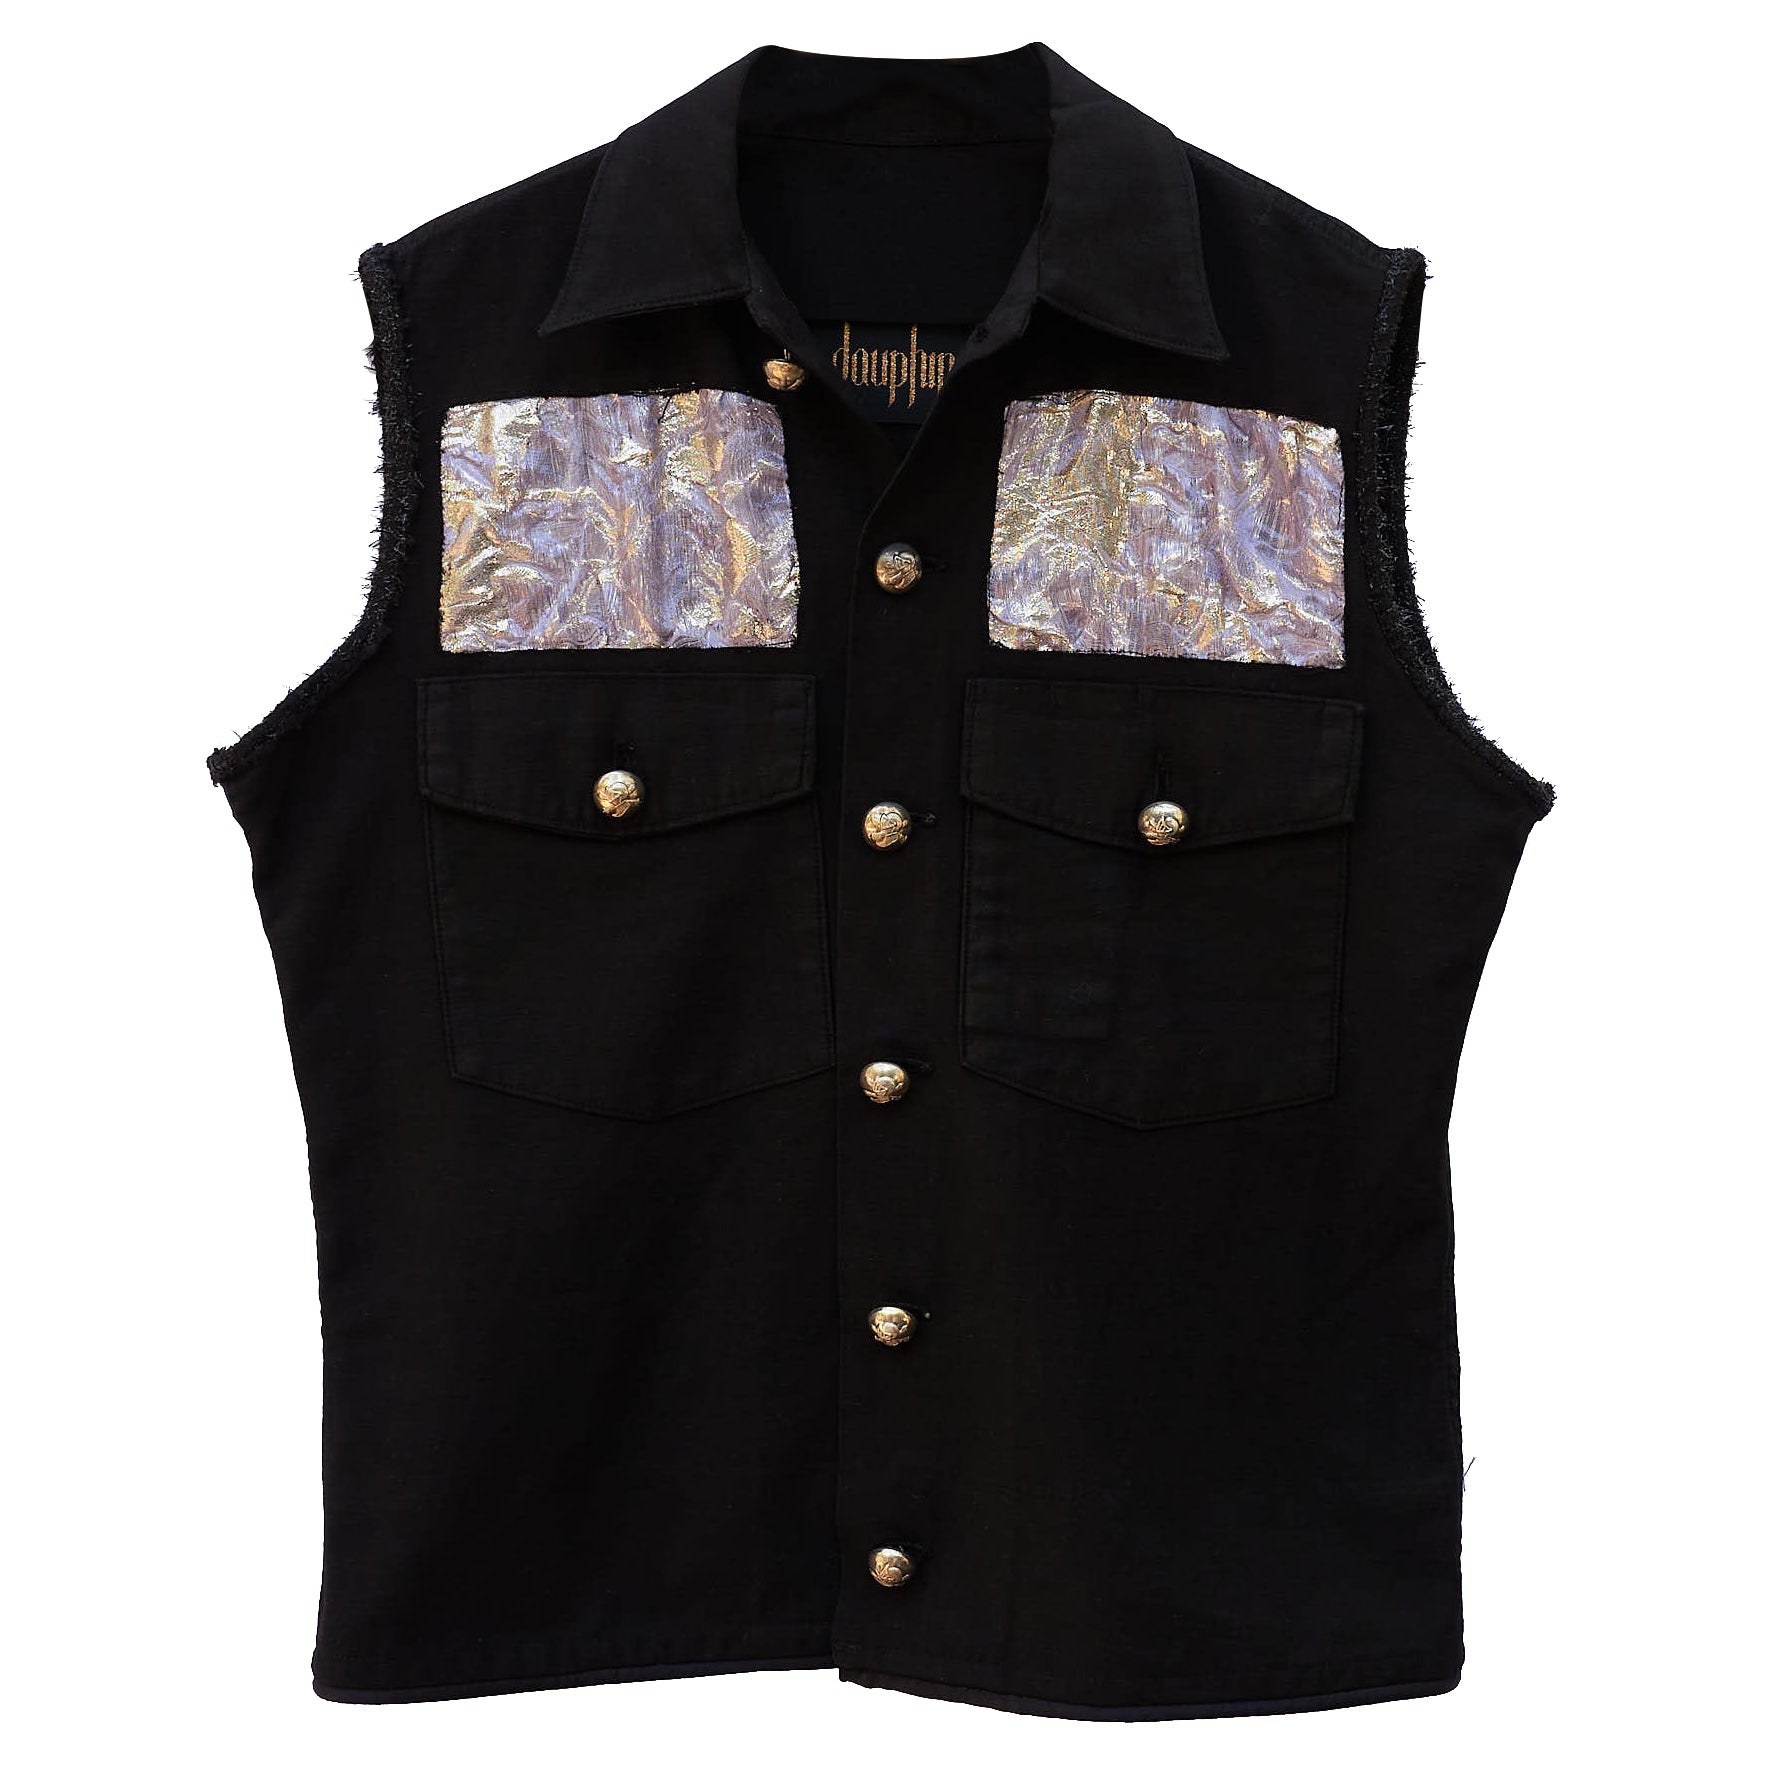 Brocade Embellished Military Vest Sleeveless Silver Vintage Buttons J Dauphin